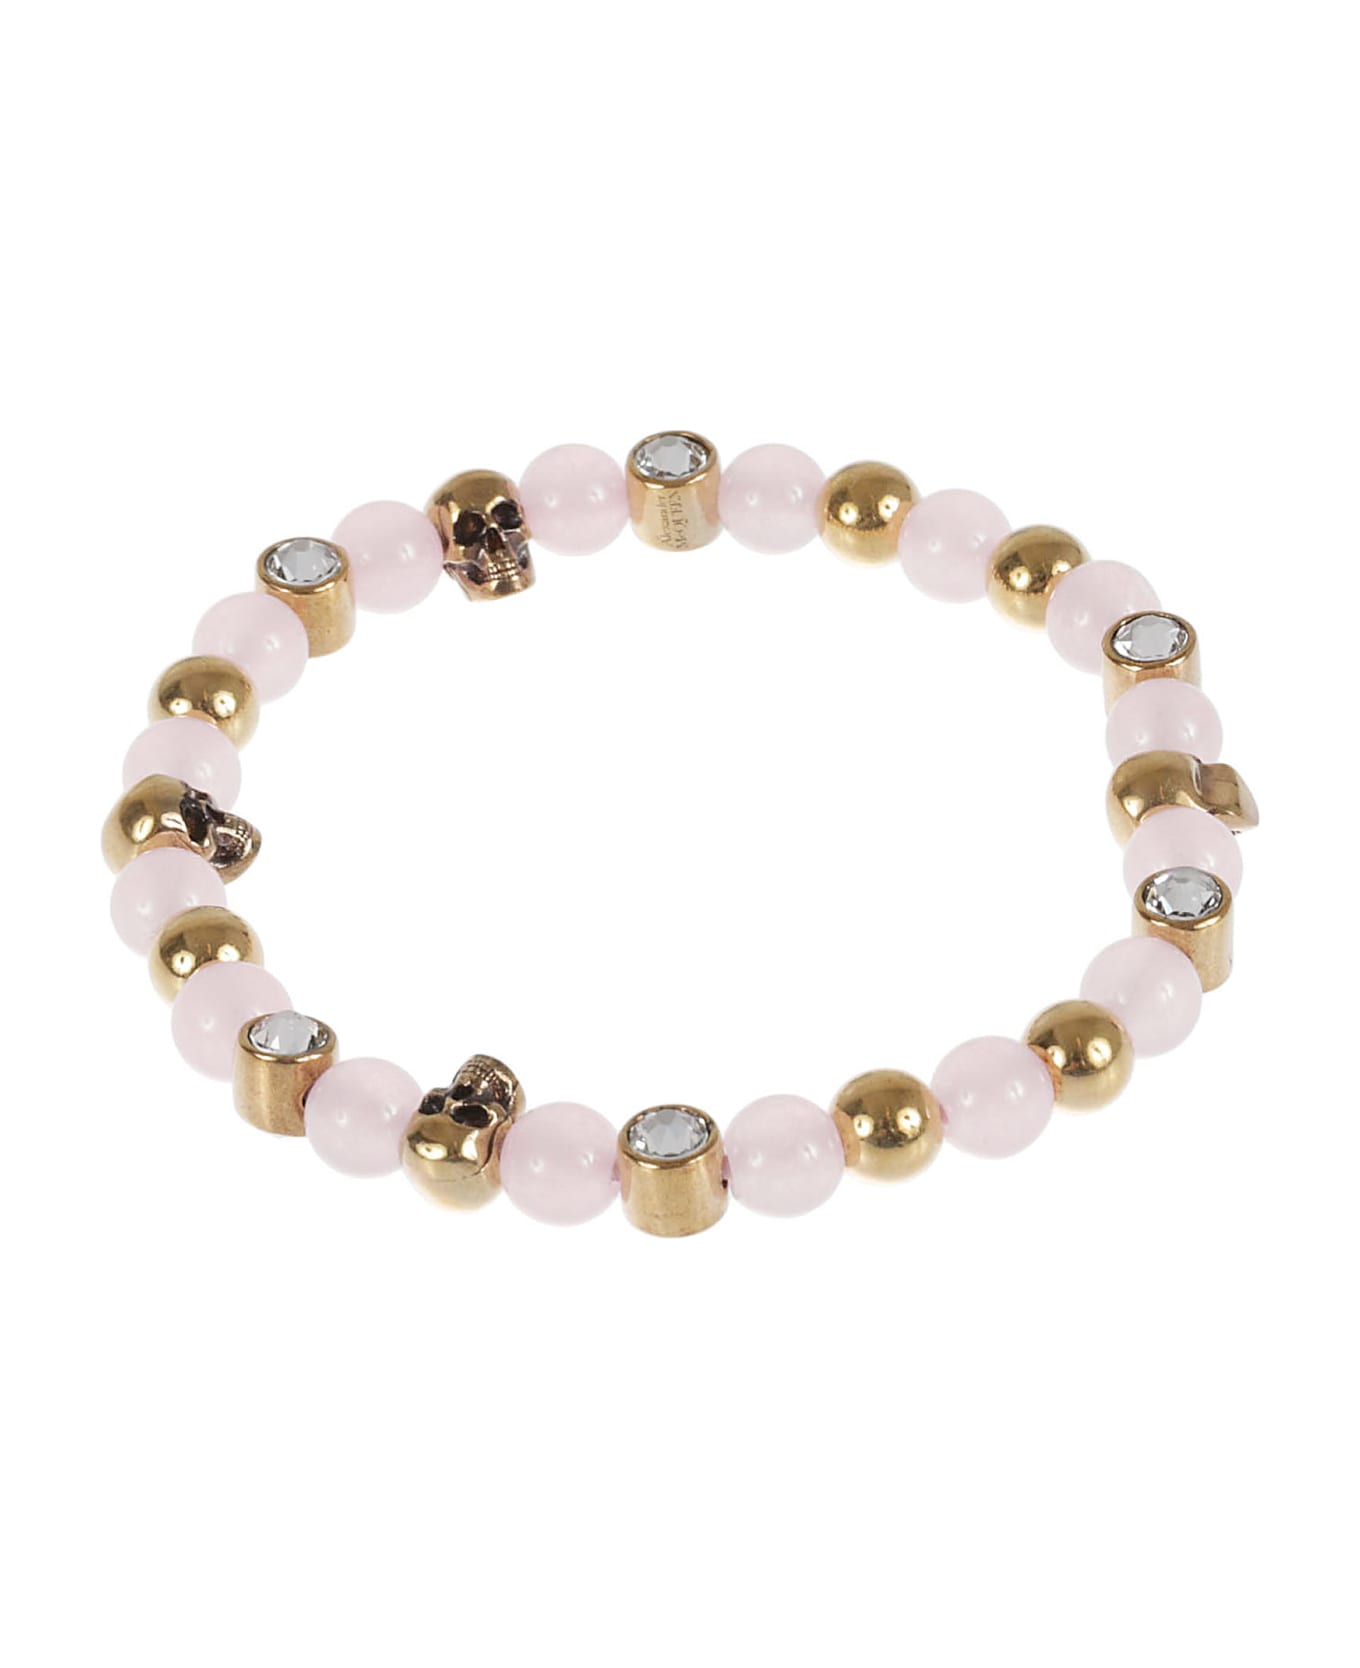 Alexander McQueen Bead Necklace - Antique Gold/Pink